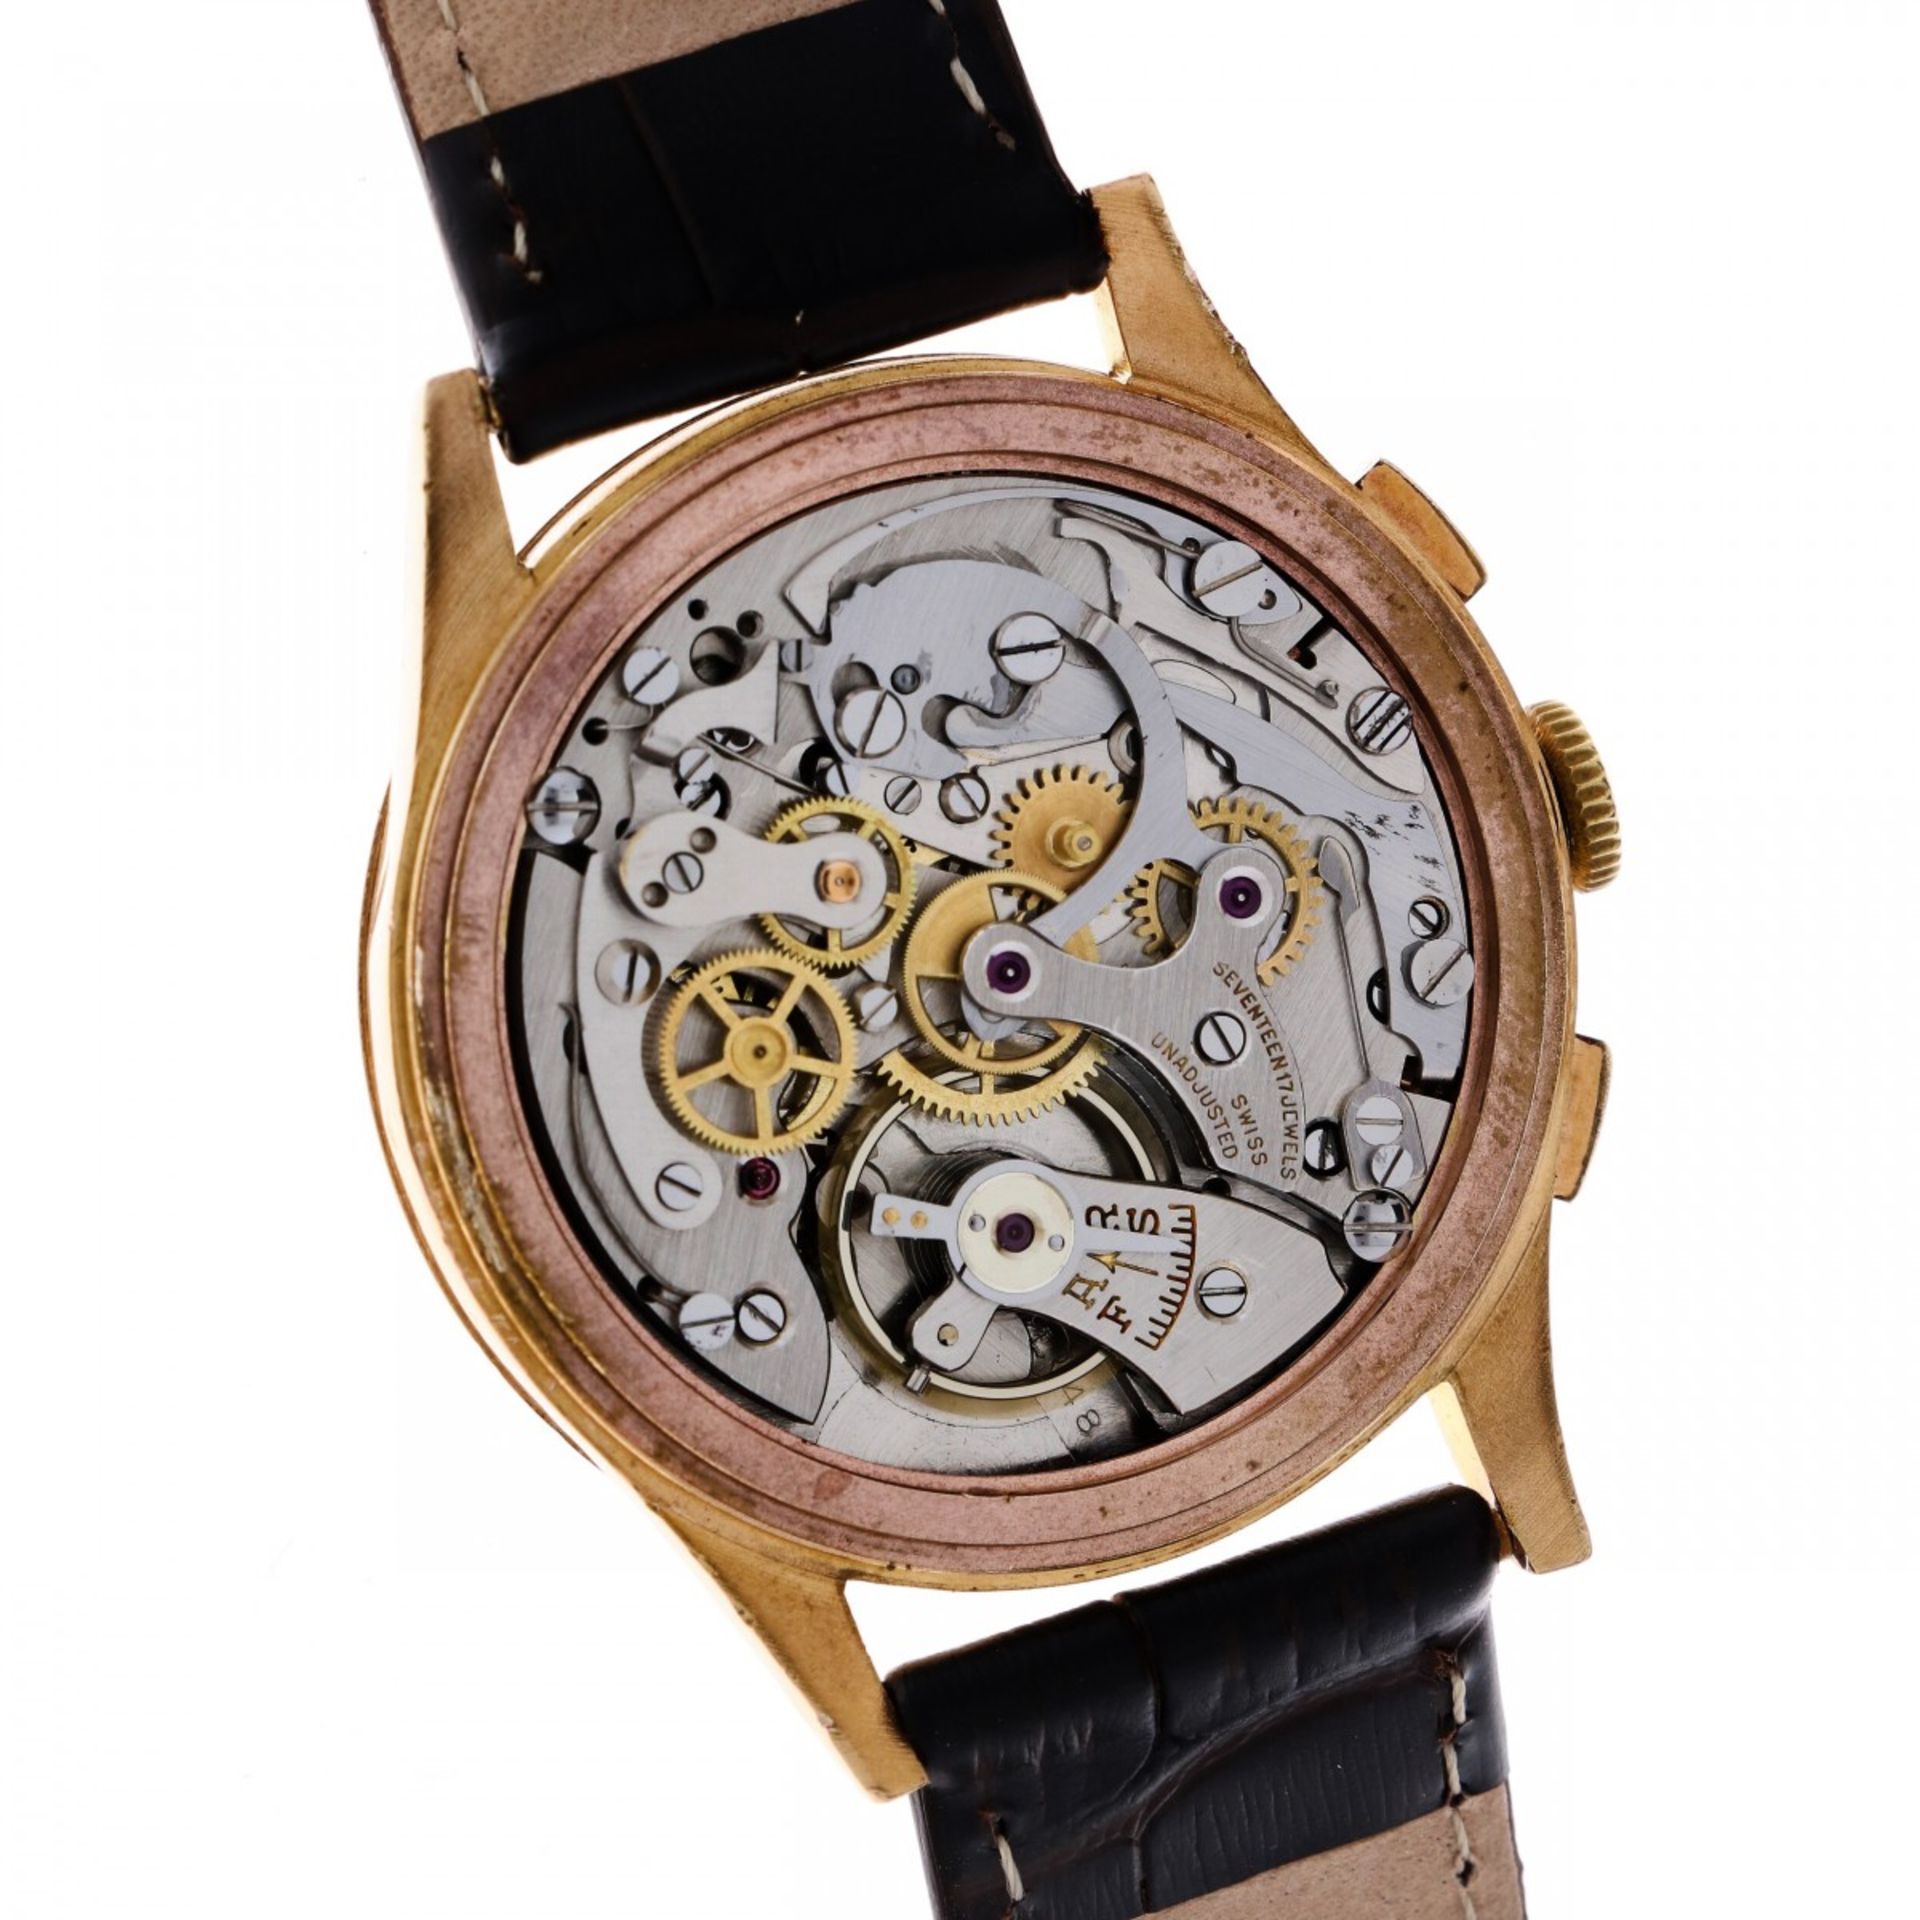 Baume & Mercier Chronograph Rose gold - Men's watch - ca. 1945 - Image 8 of 9